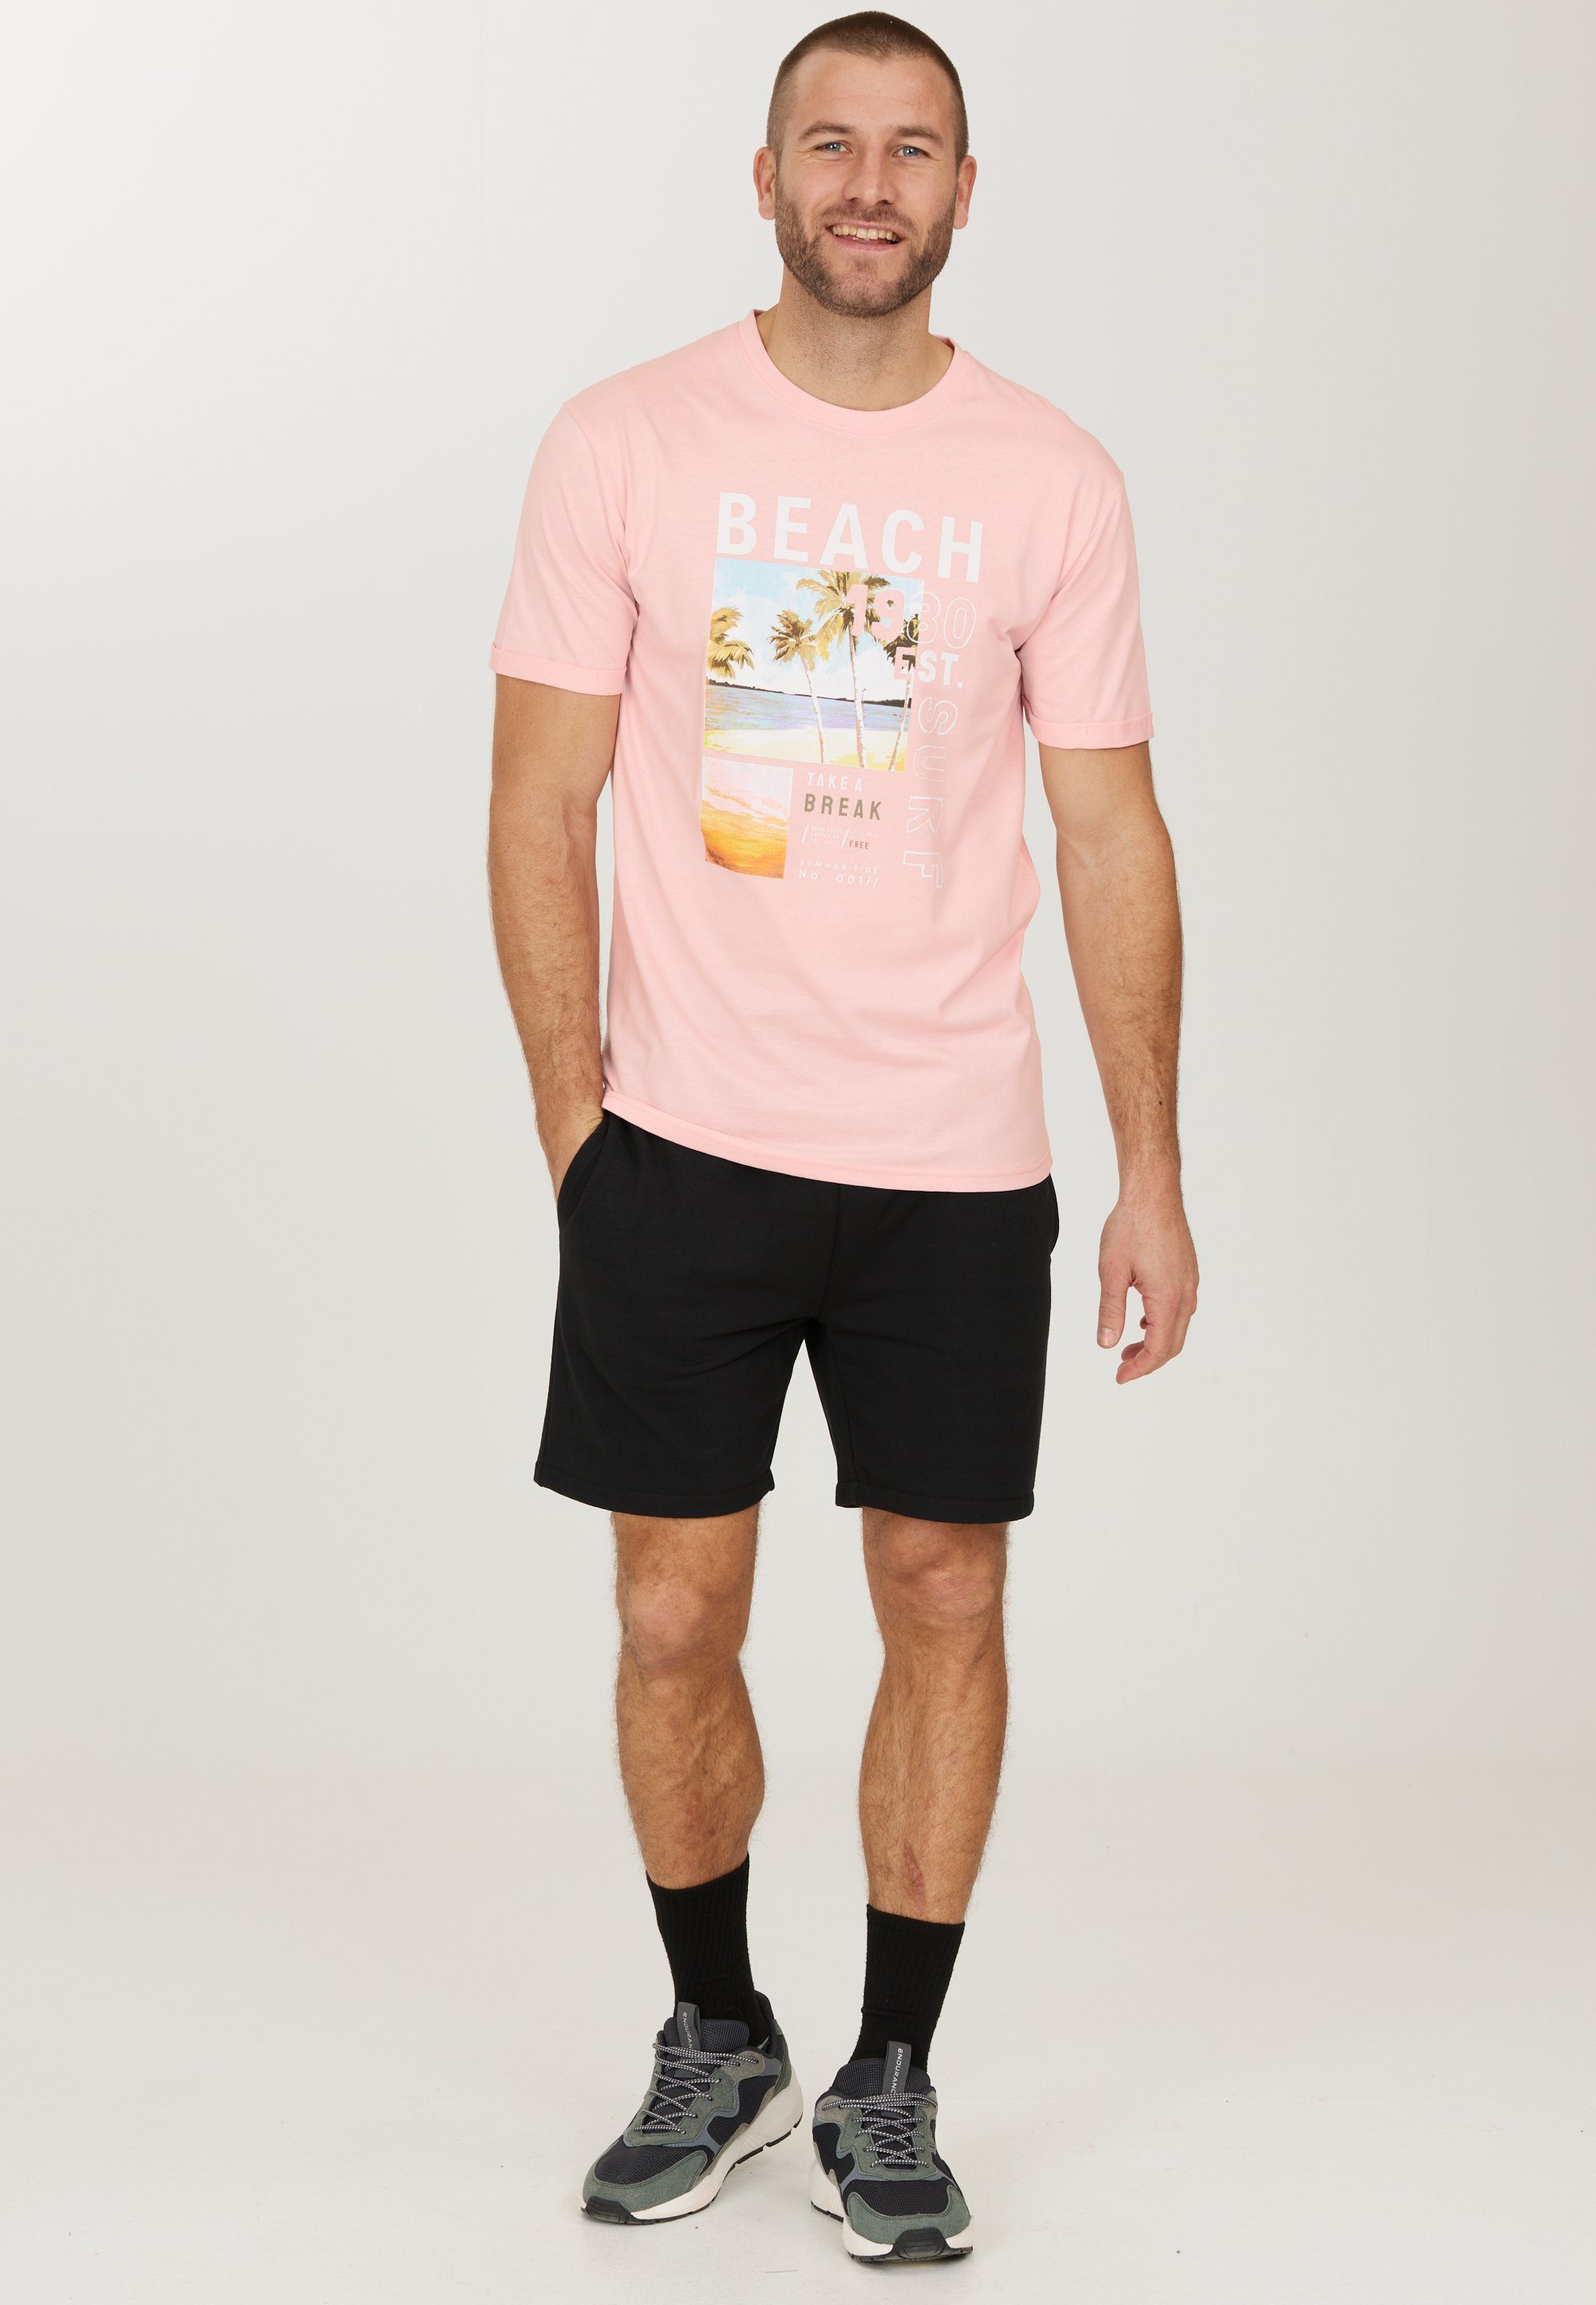 Thomsson sommerlichen T-Shirt im CRUZ rosa Design